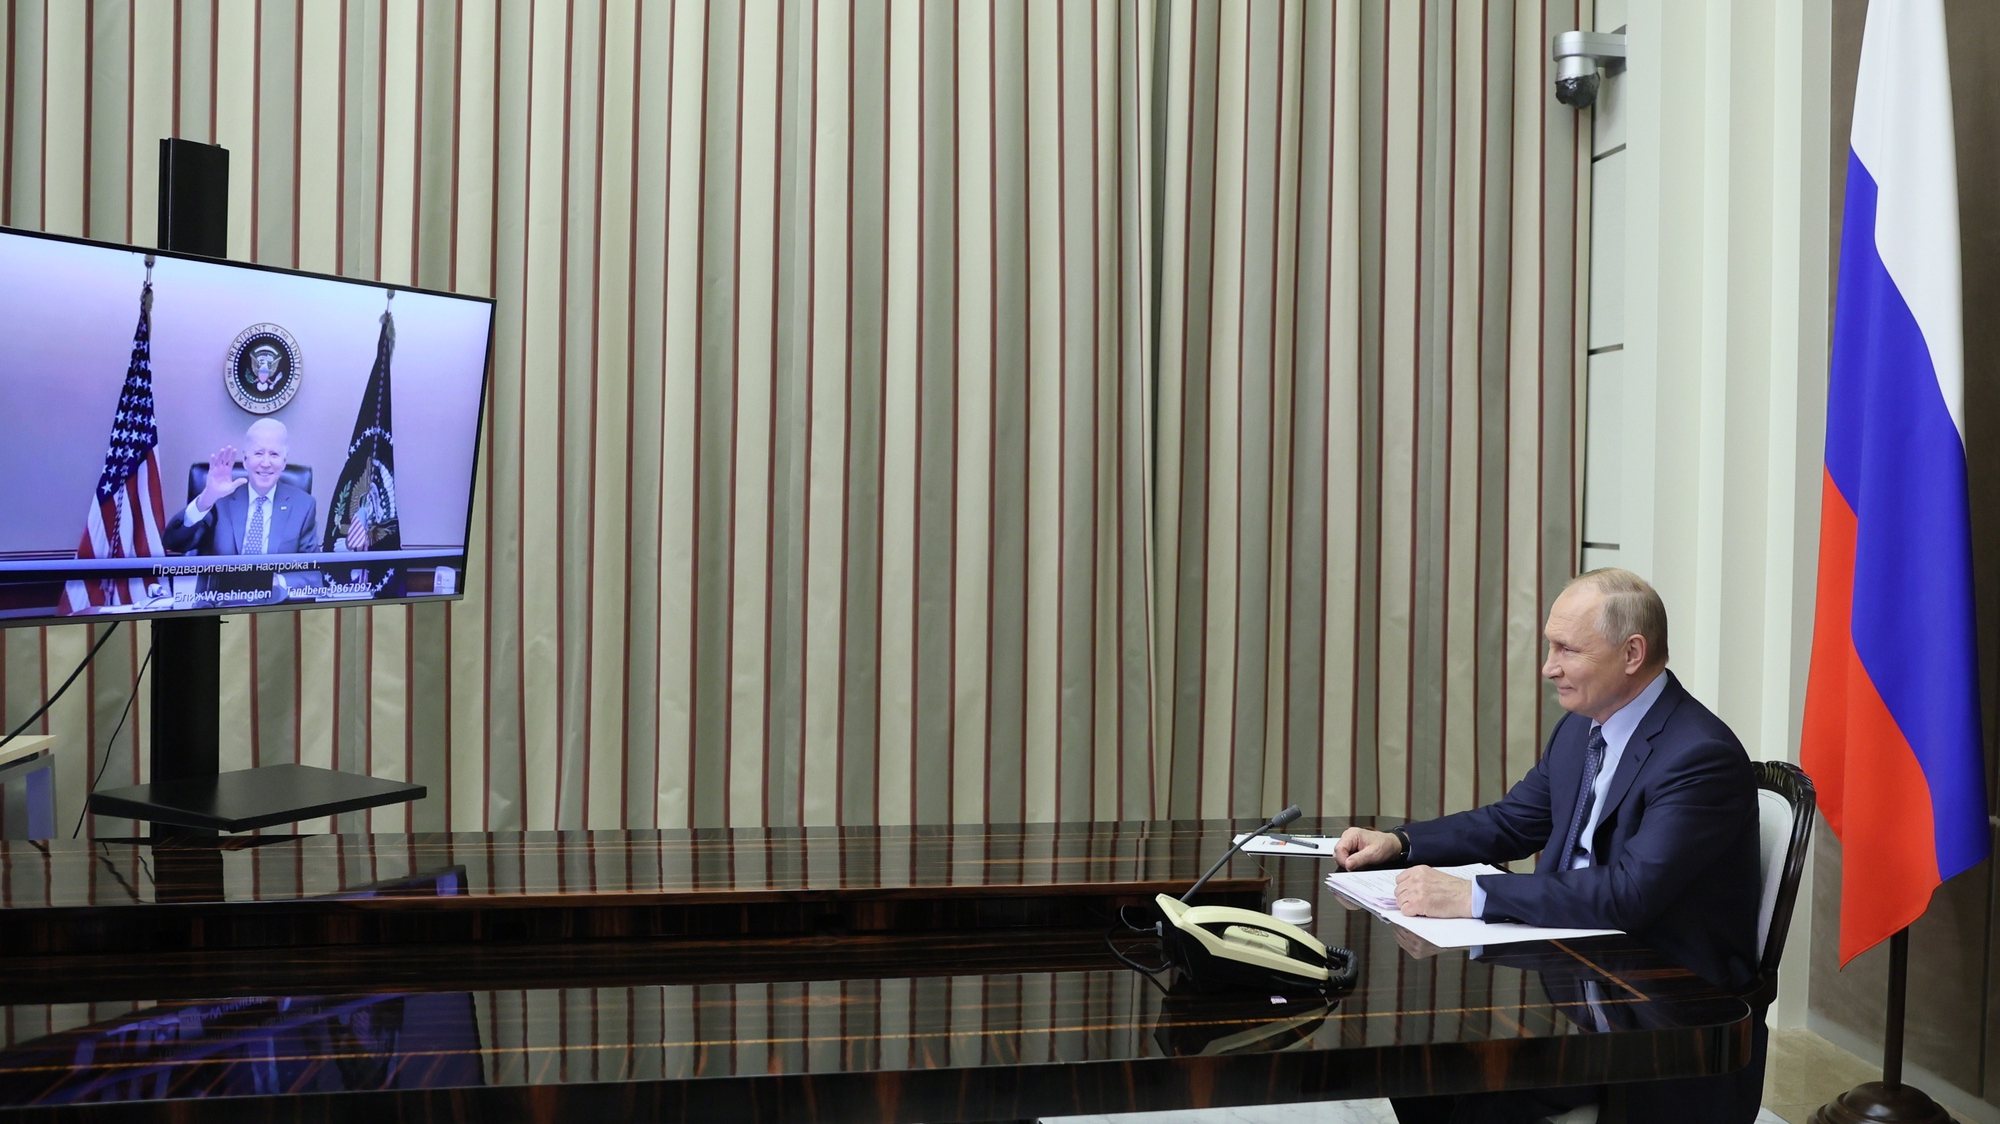 Vladimir Putin e Joe Biden em videoconferência